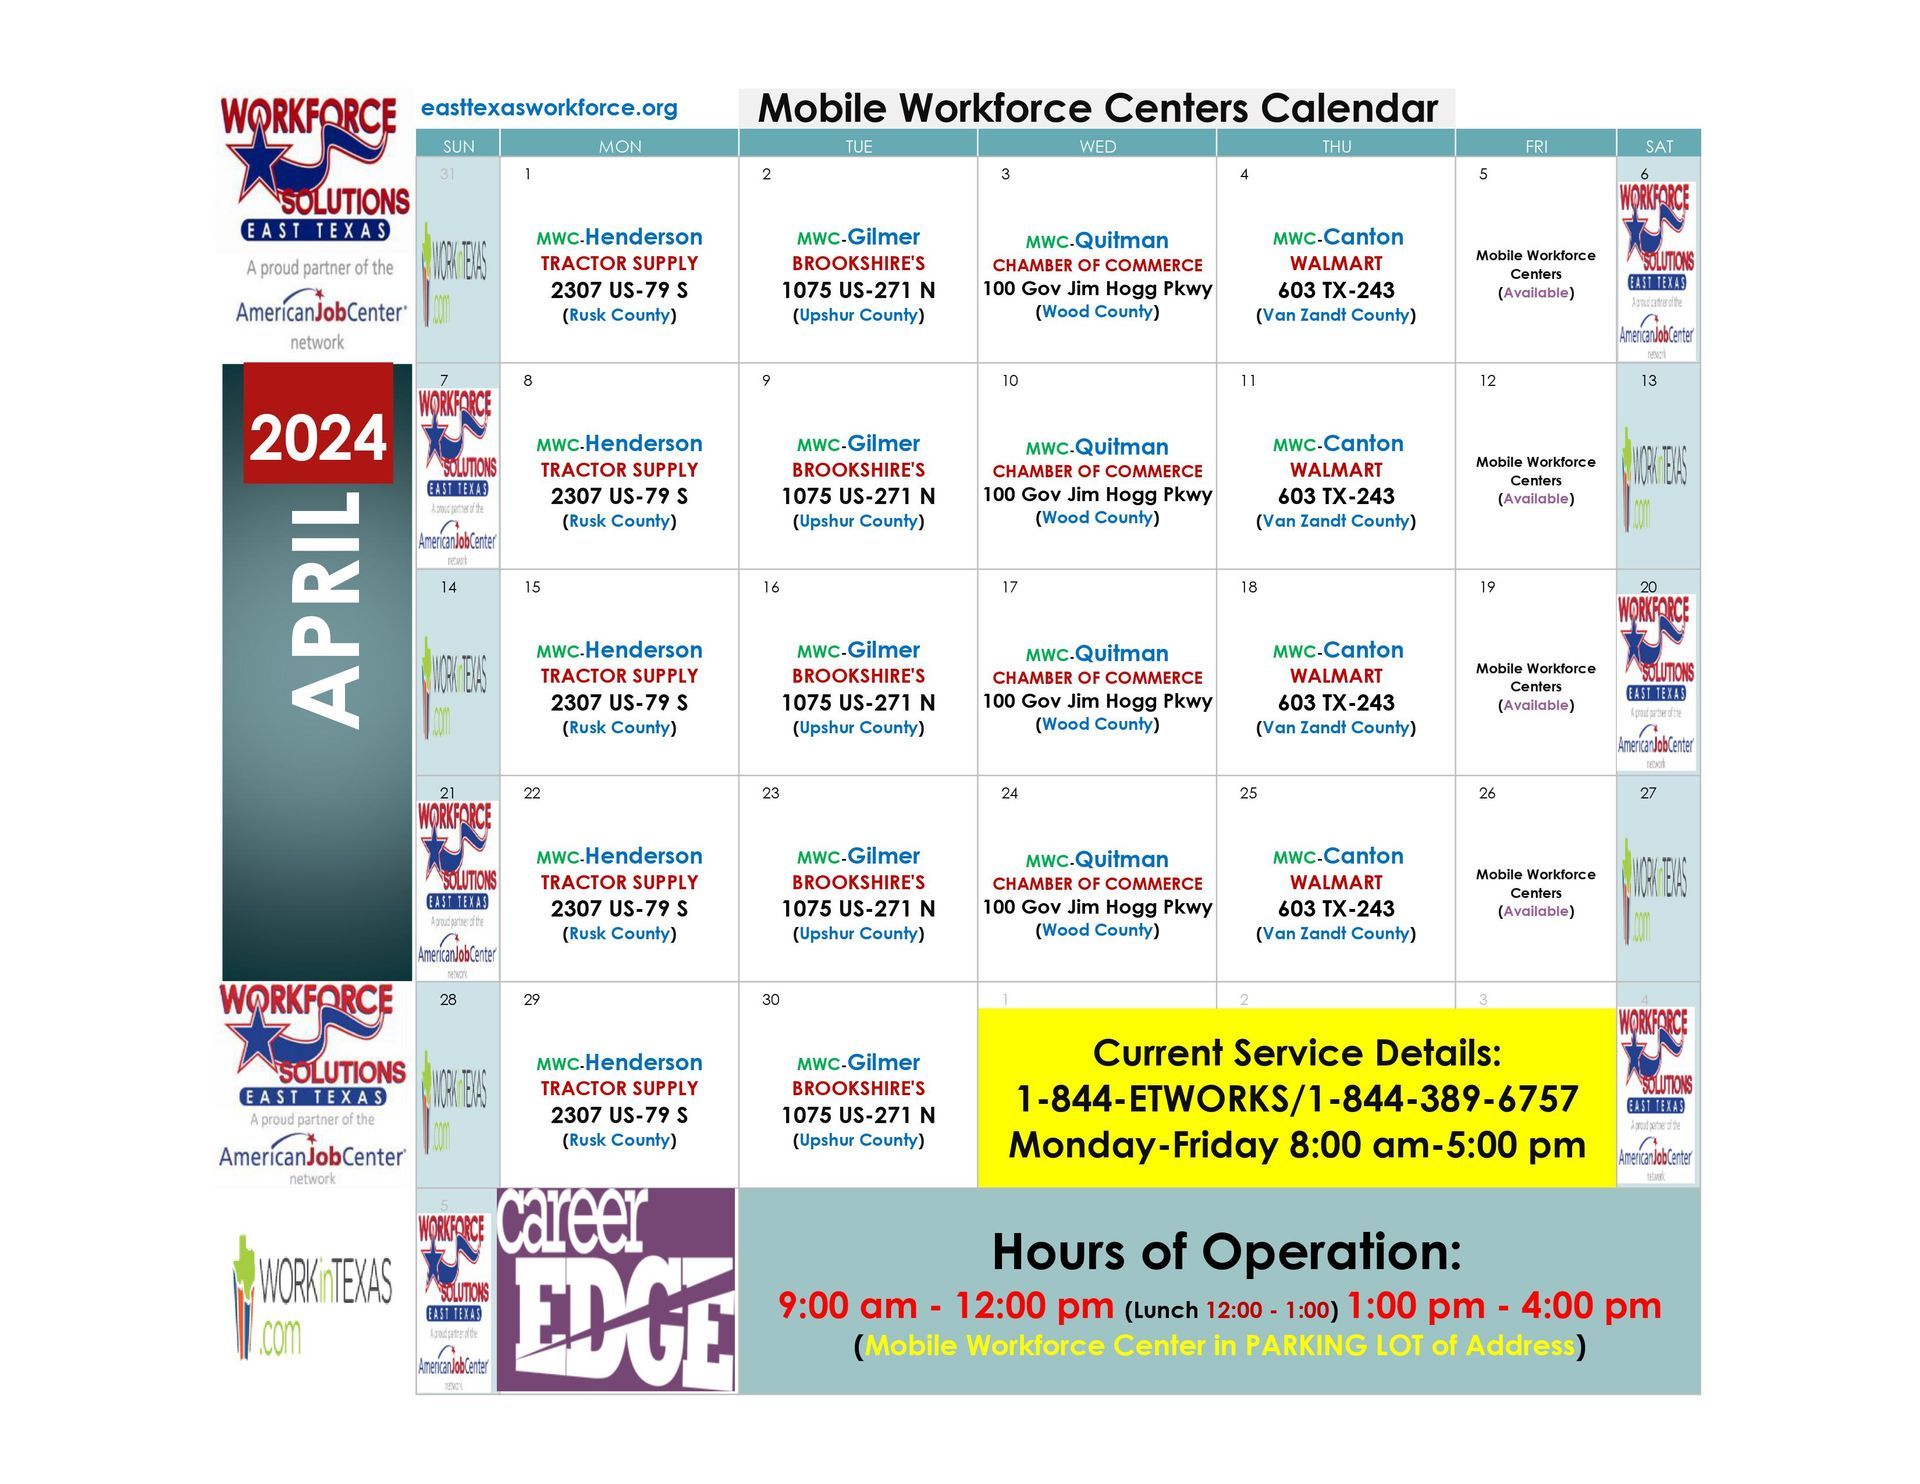 A mobile workforce careless calendar for april 2024